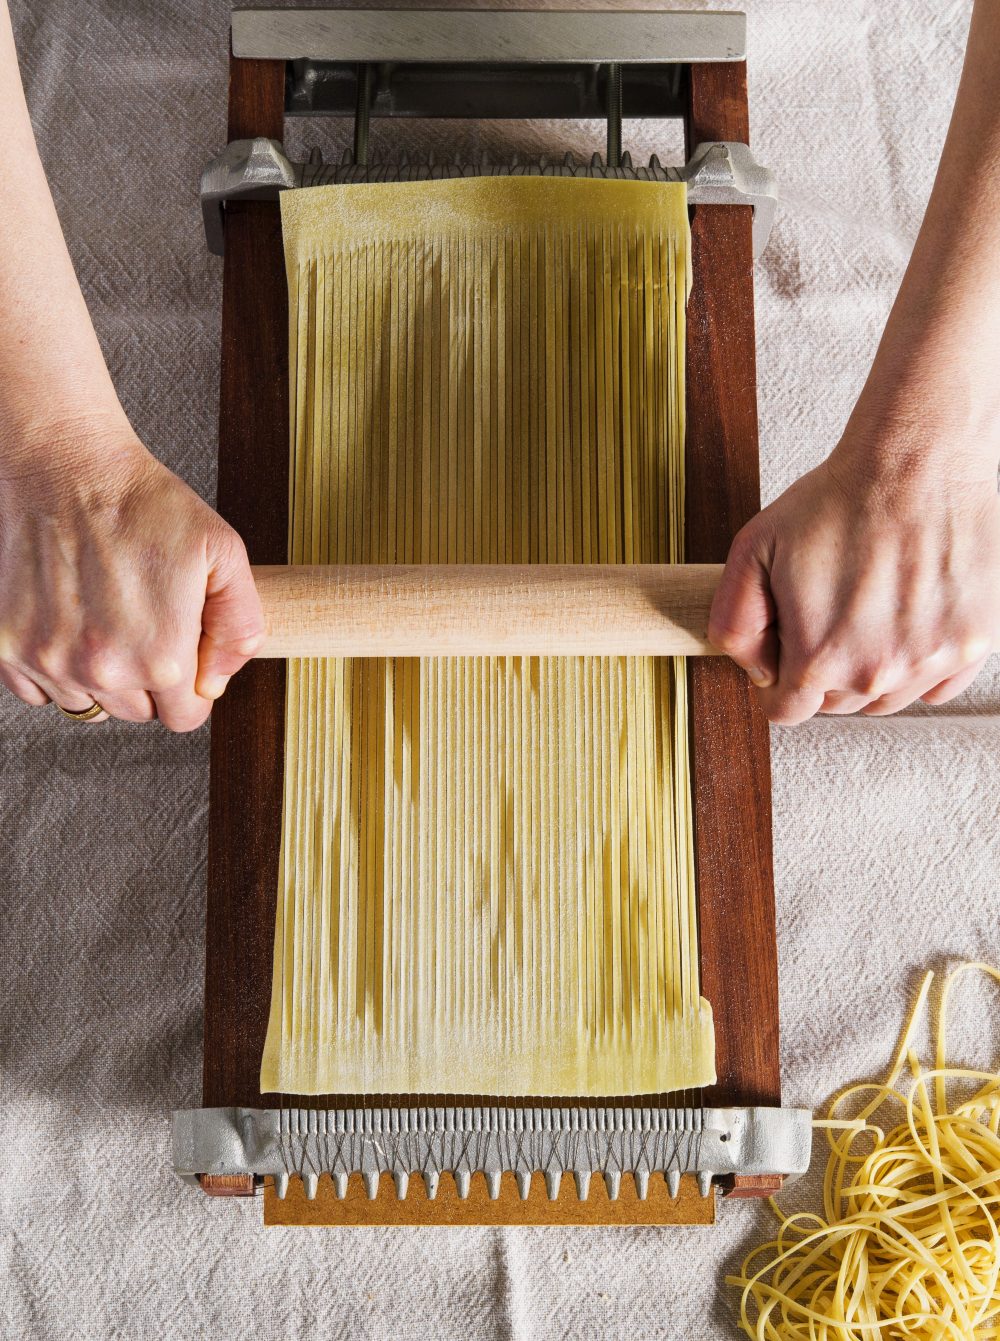 A chitarra tool cuts fresh pasta sheets into thin strands.